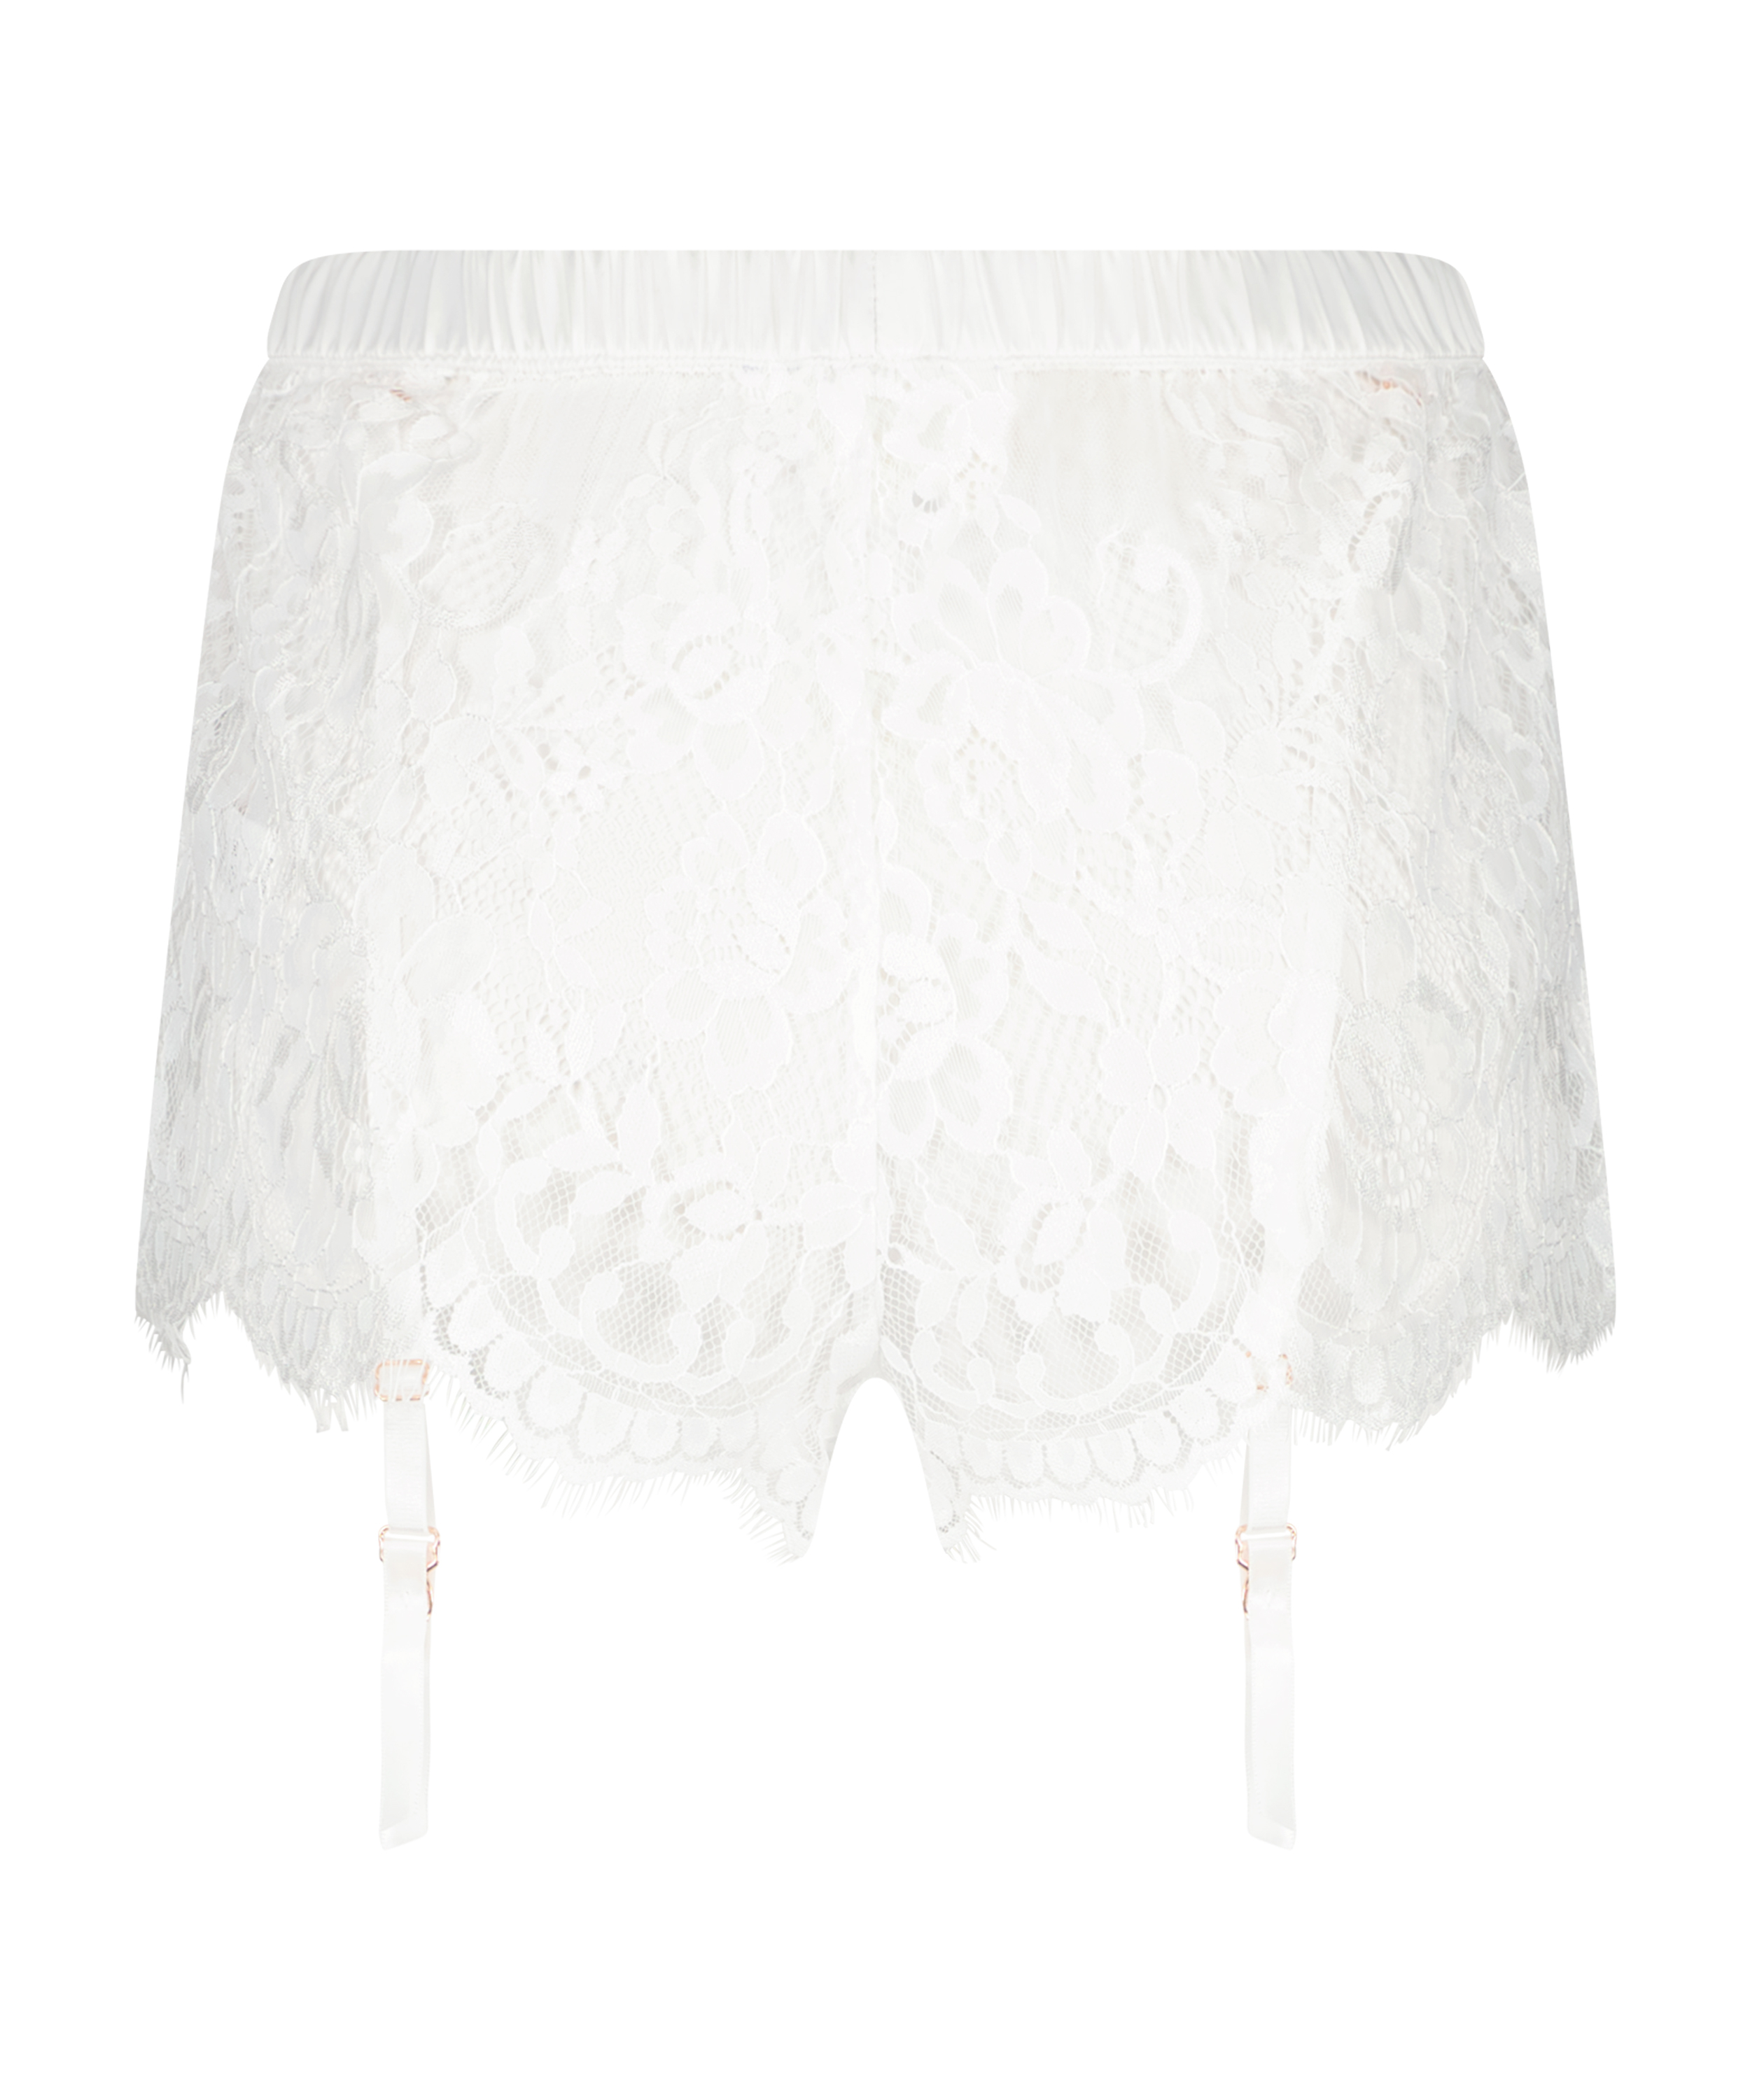 Arabella shorts, White, main